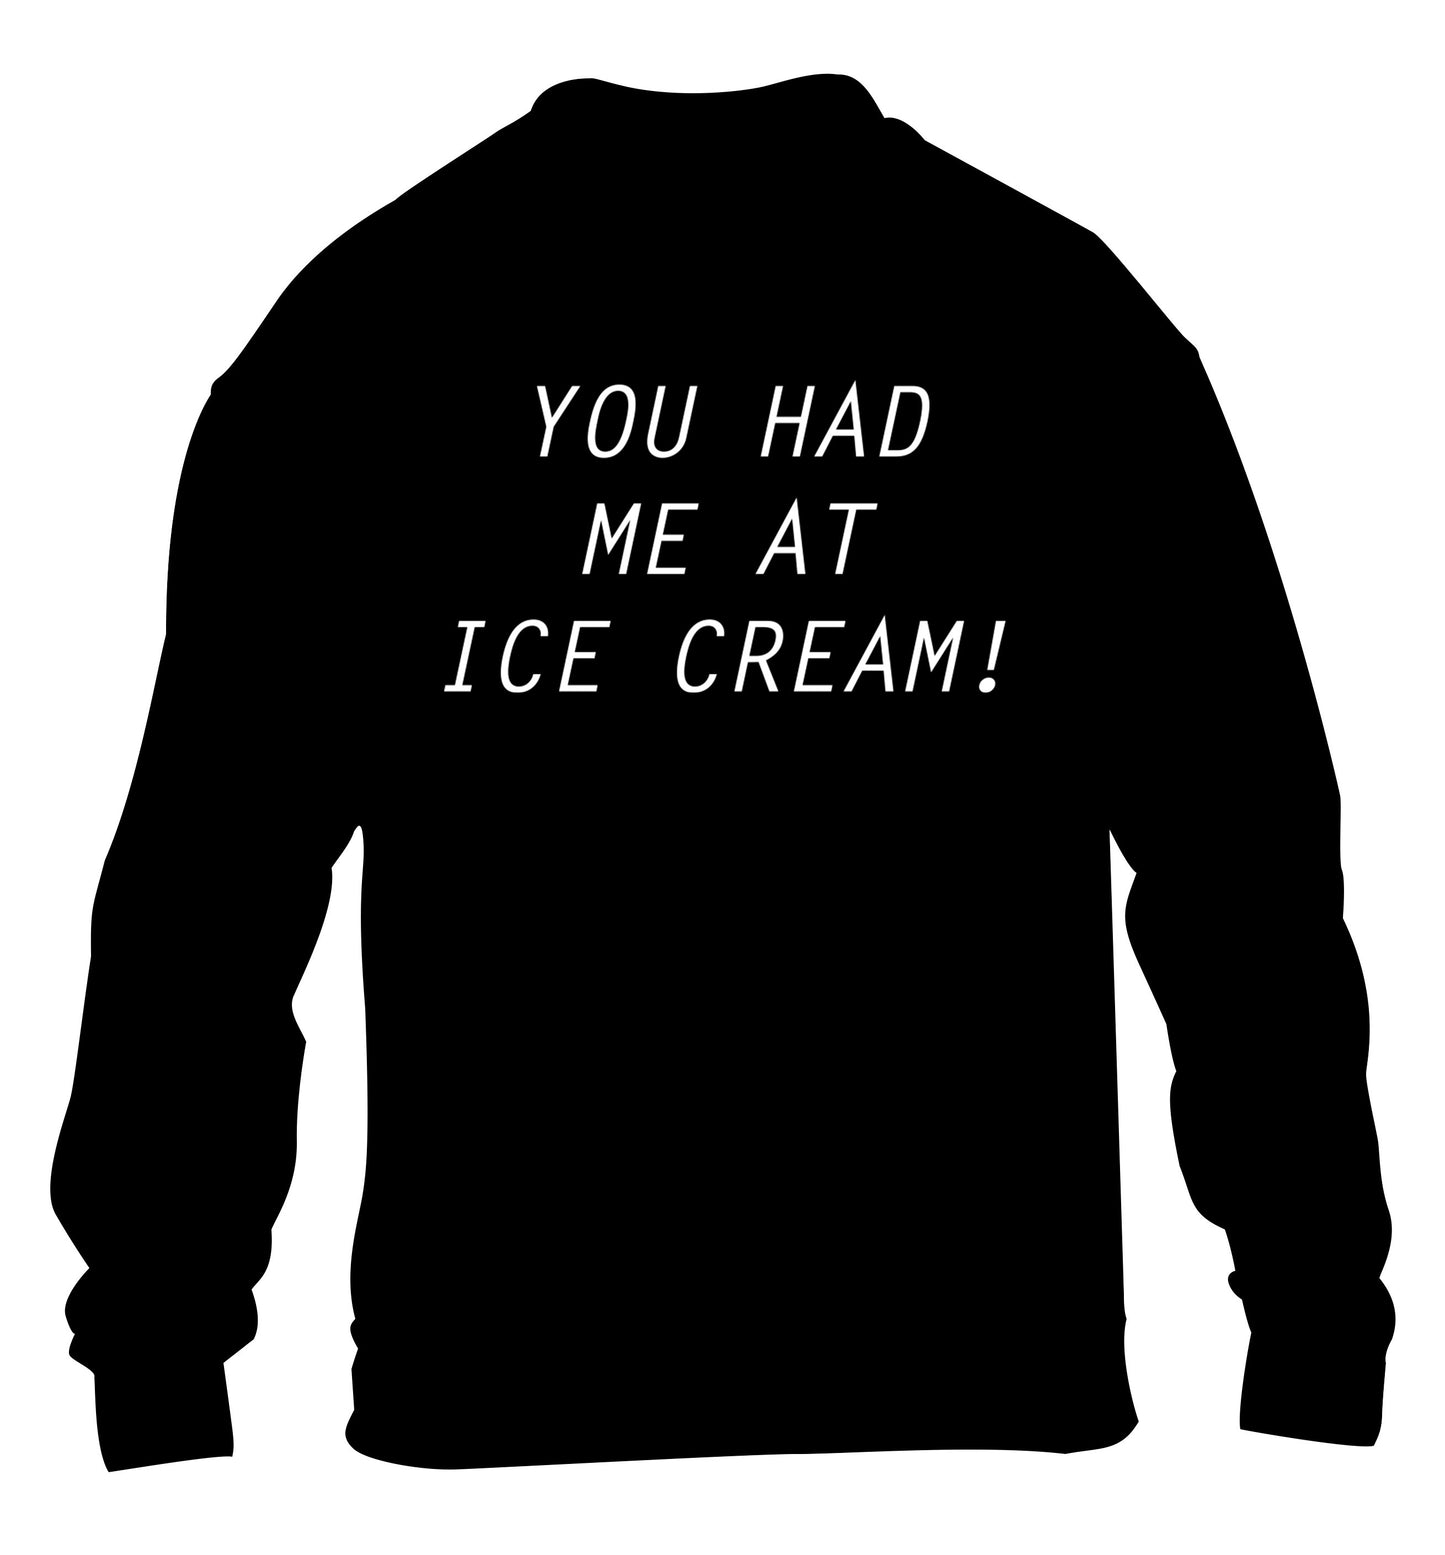 You had me at ice cream children's black sweater 12-14 Years